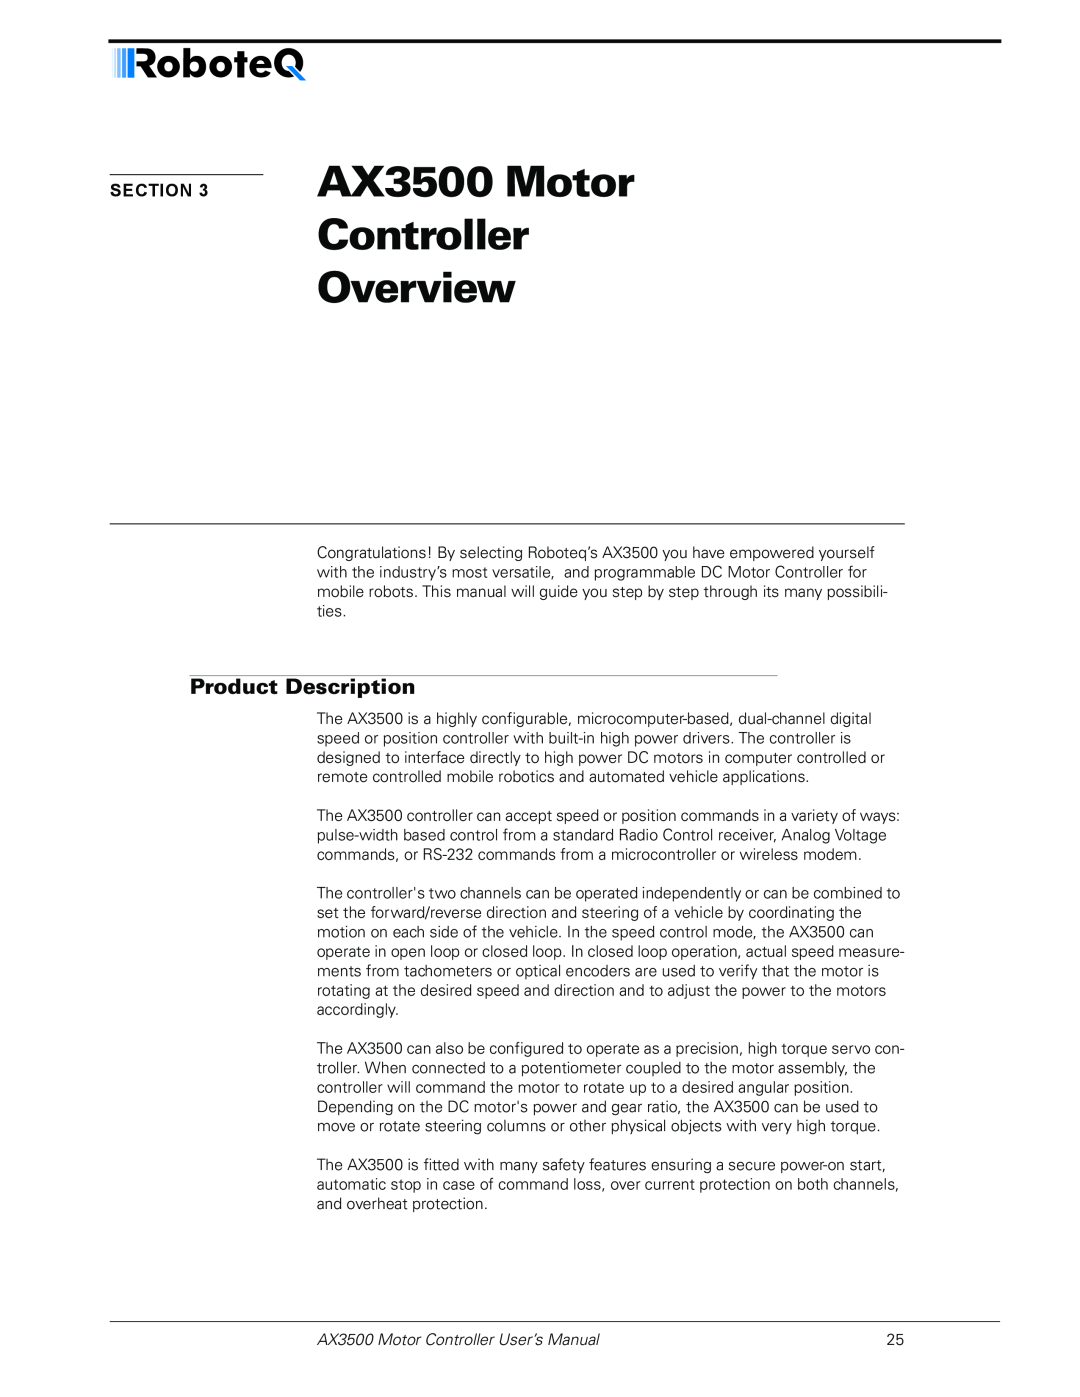 RoboteQ user manual AX3500 Motor Controller Overview, Product Description, AX3500 Motor Controller User’s Manual 